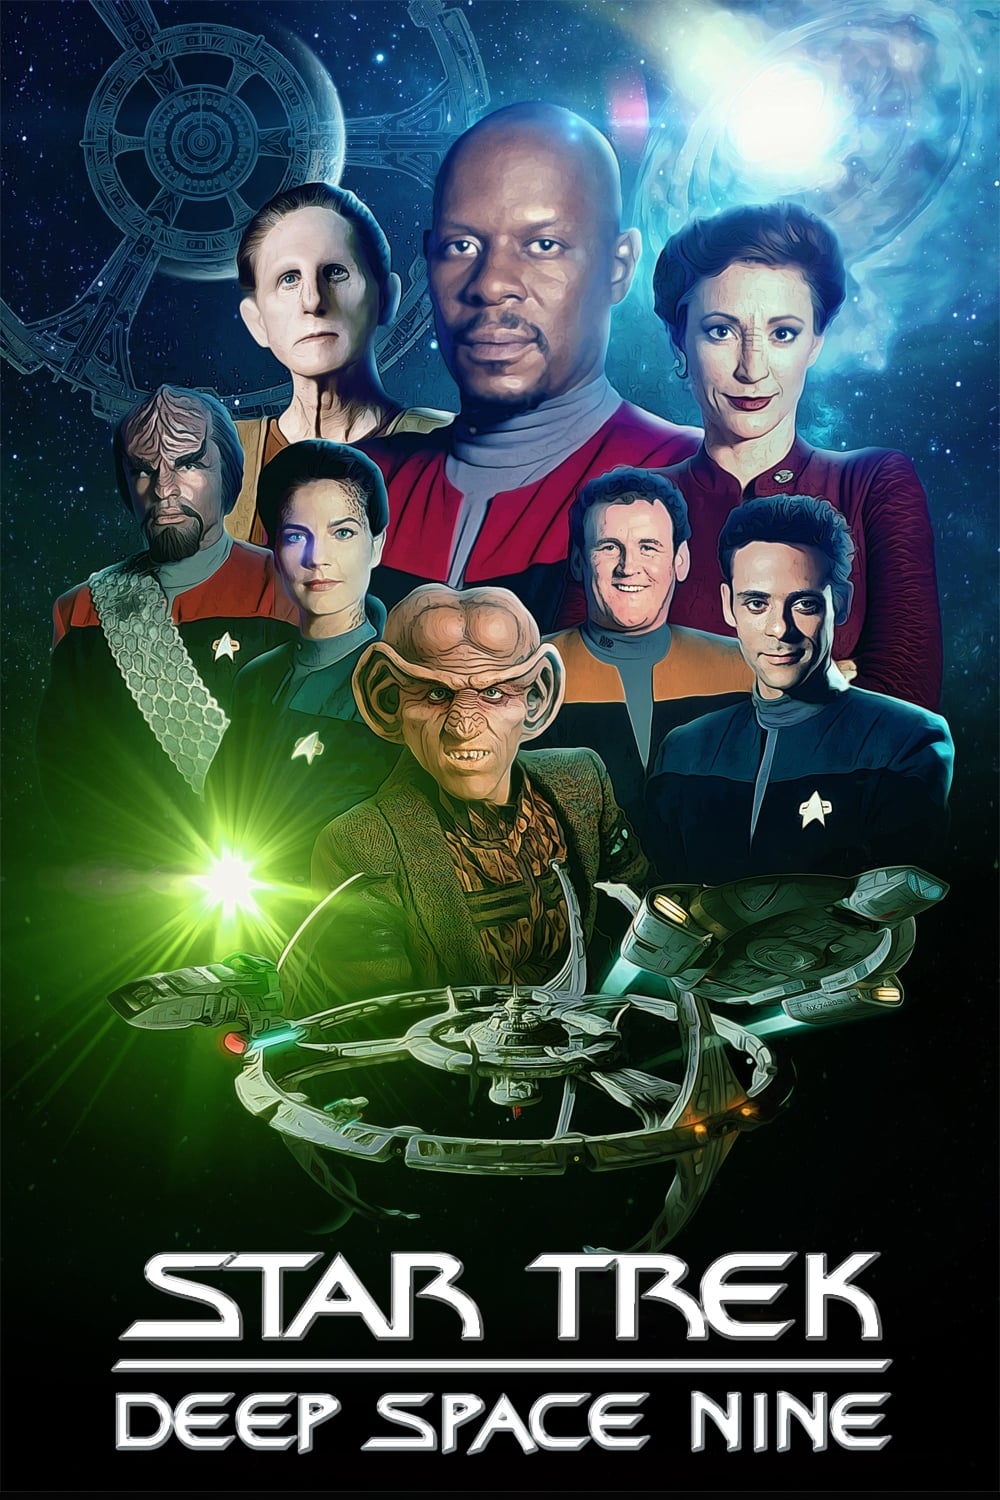 Star Trek: Deep Space Nine TV Shows About Shape Shifting Alien